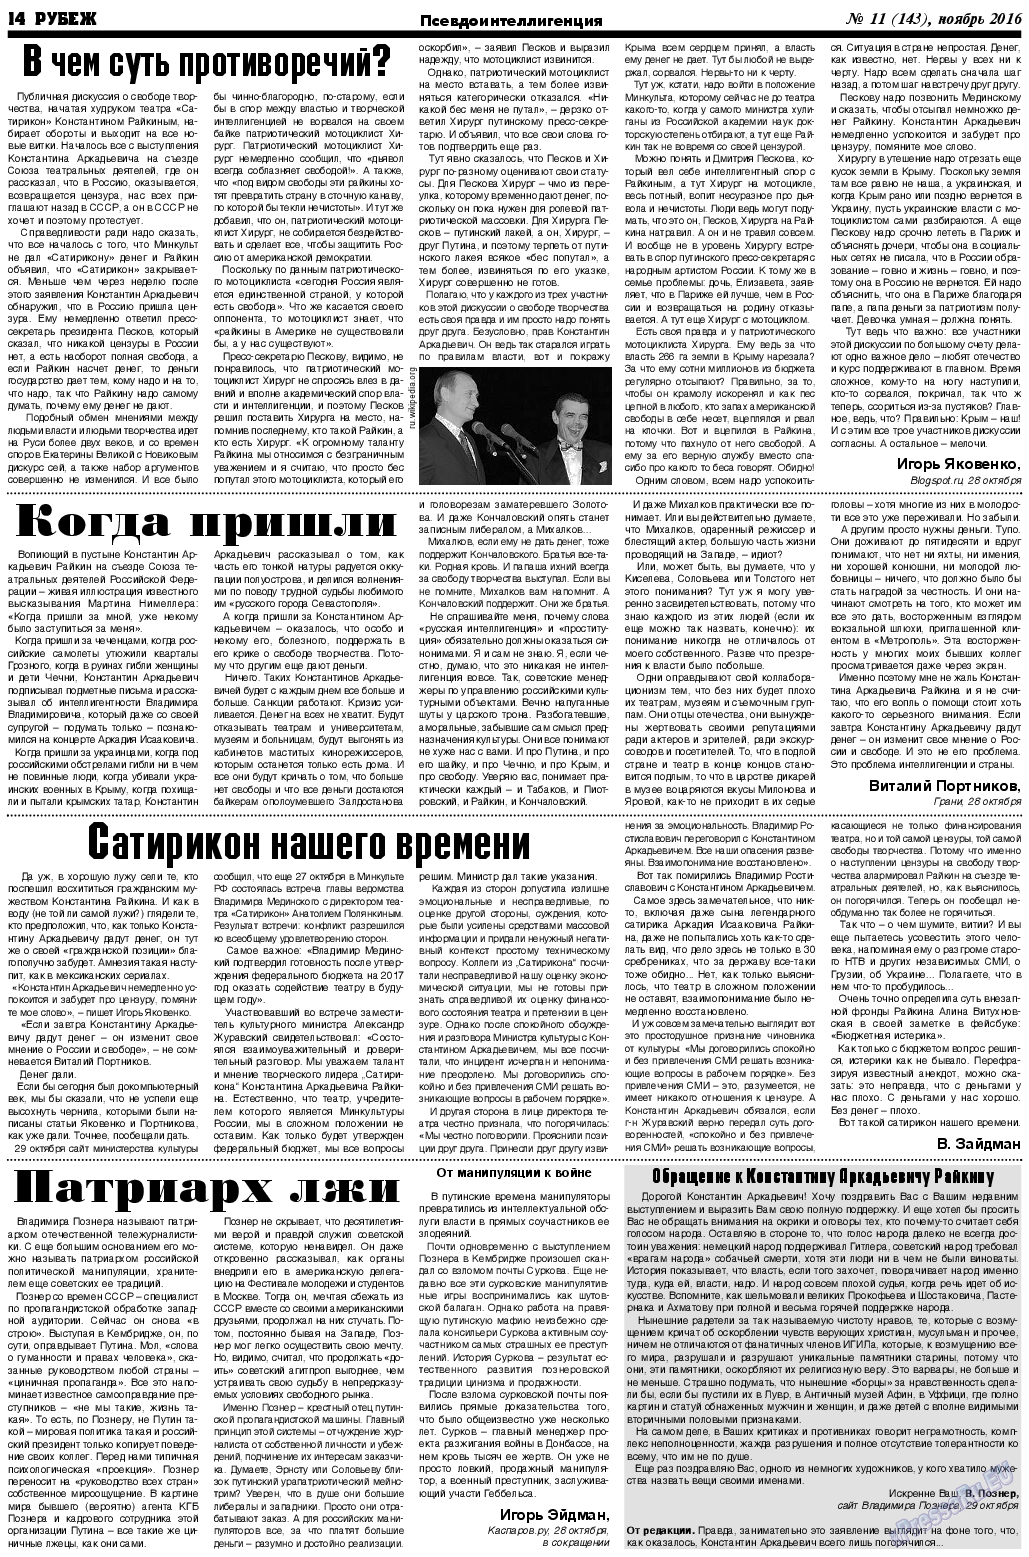 Рубеж, газета. 2016 №11 стр.14